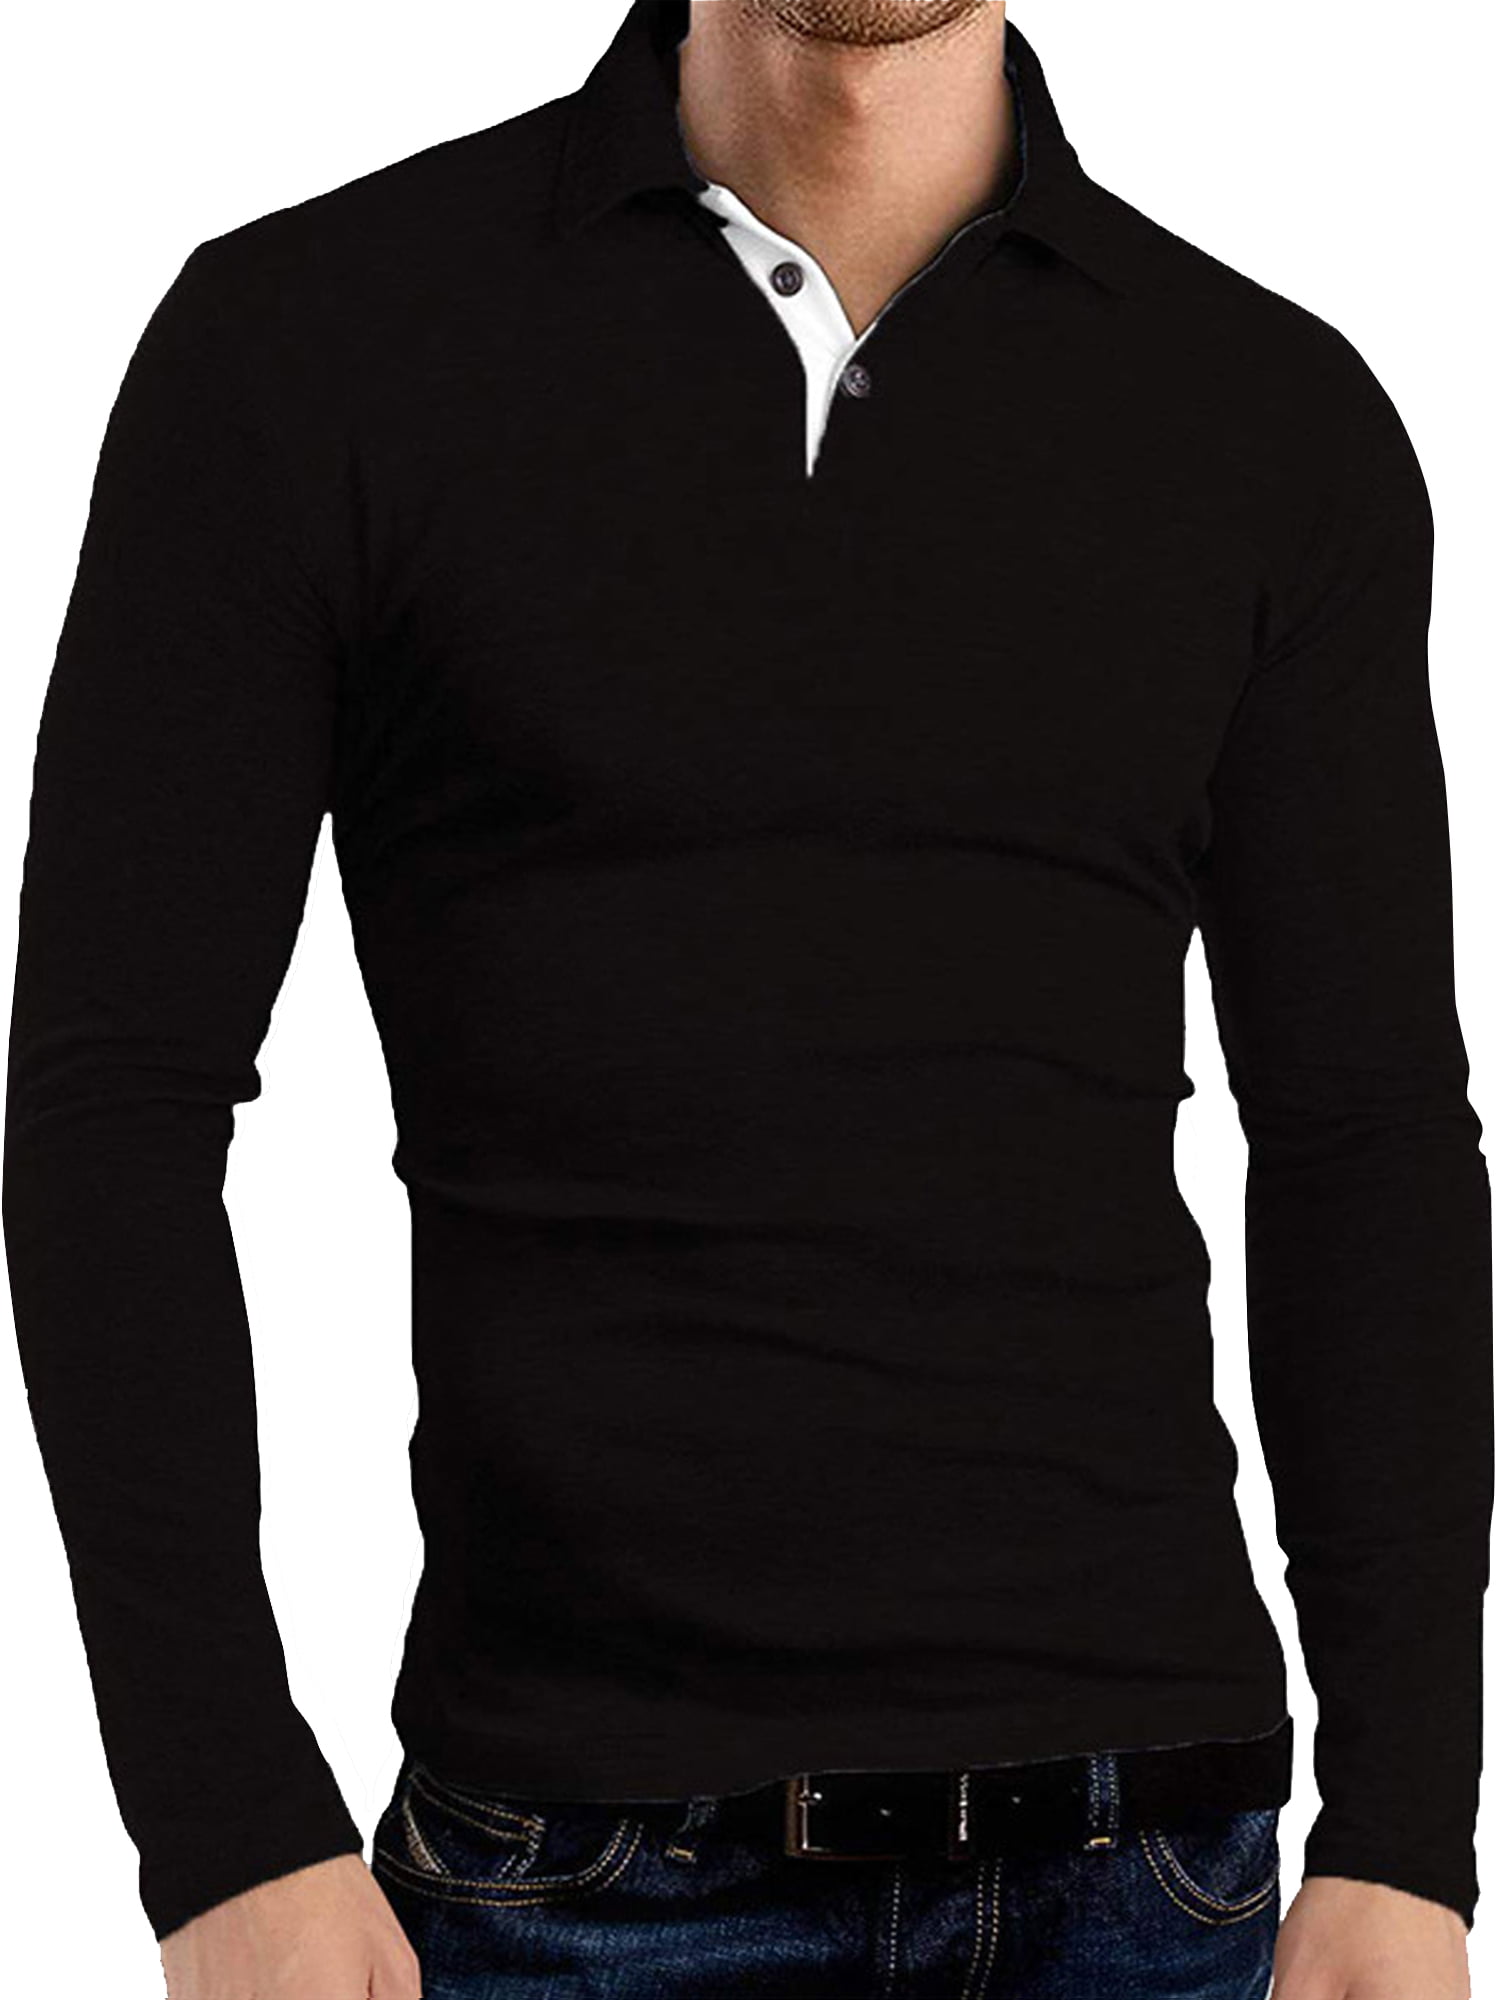 Details about   Men's D-Rock Stripe Poloshirt Short Sleeve Slim Fit 100% Polyester S M L XL XXL 